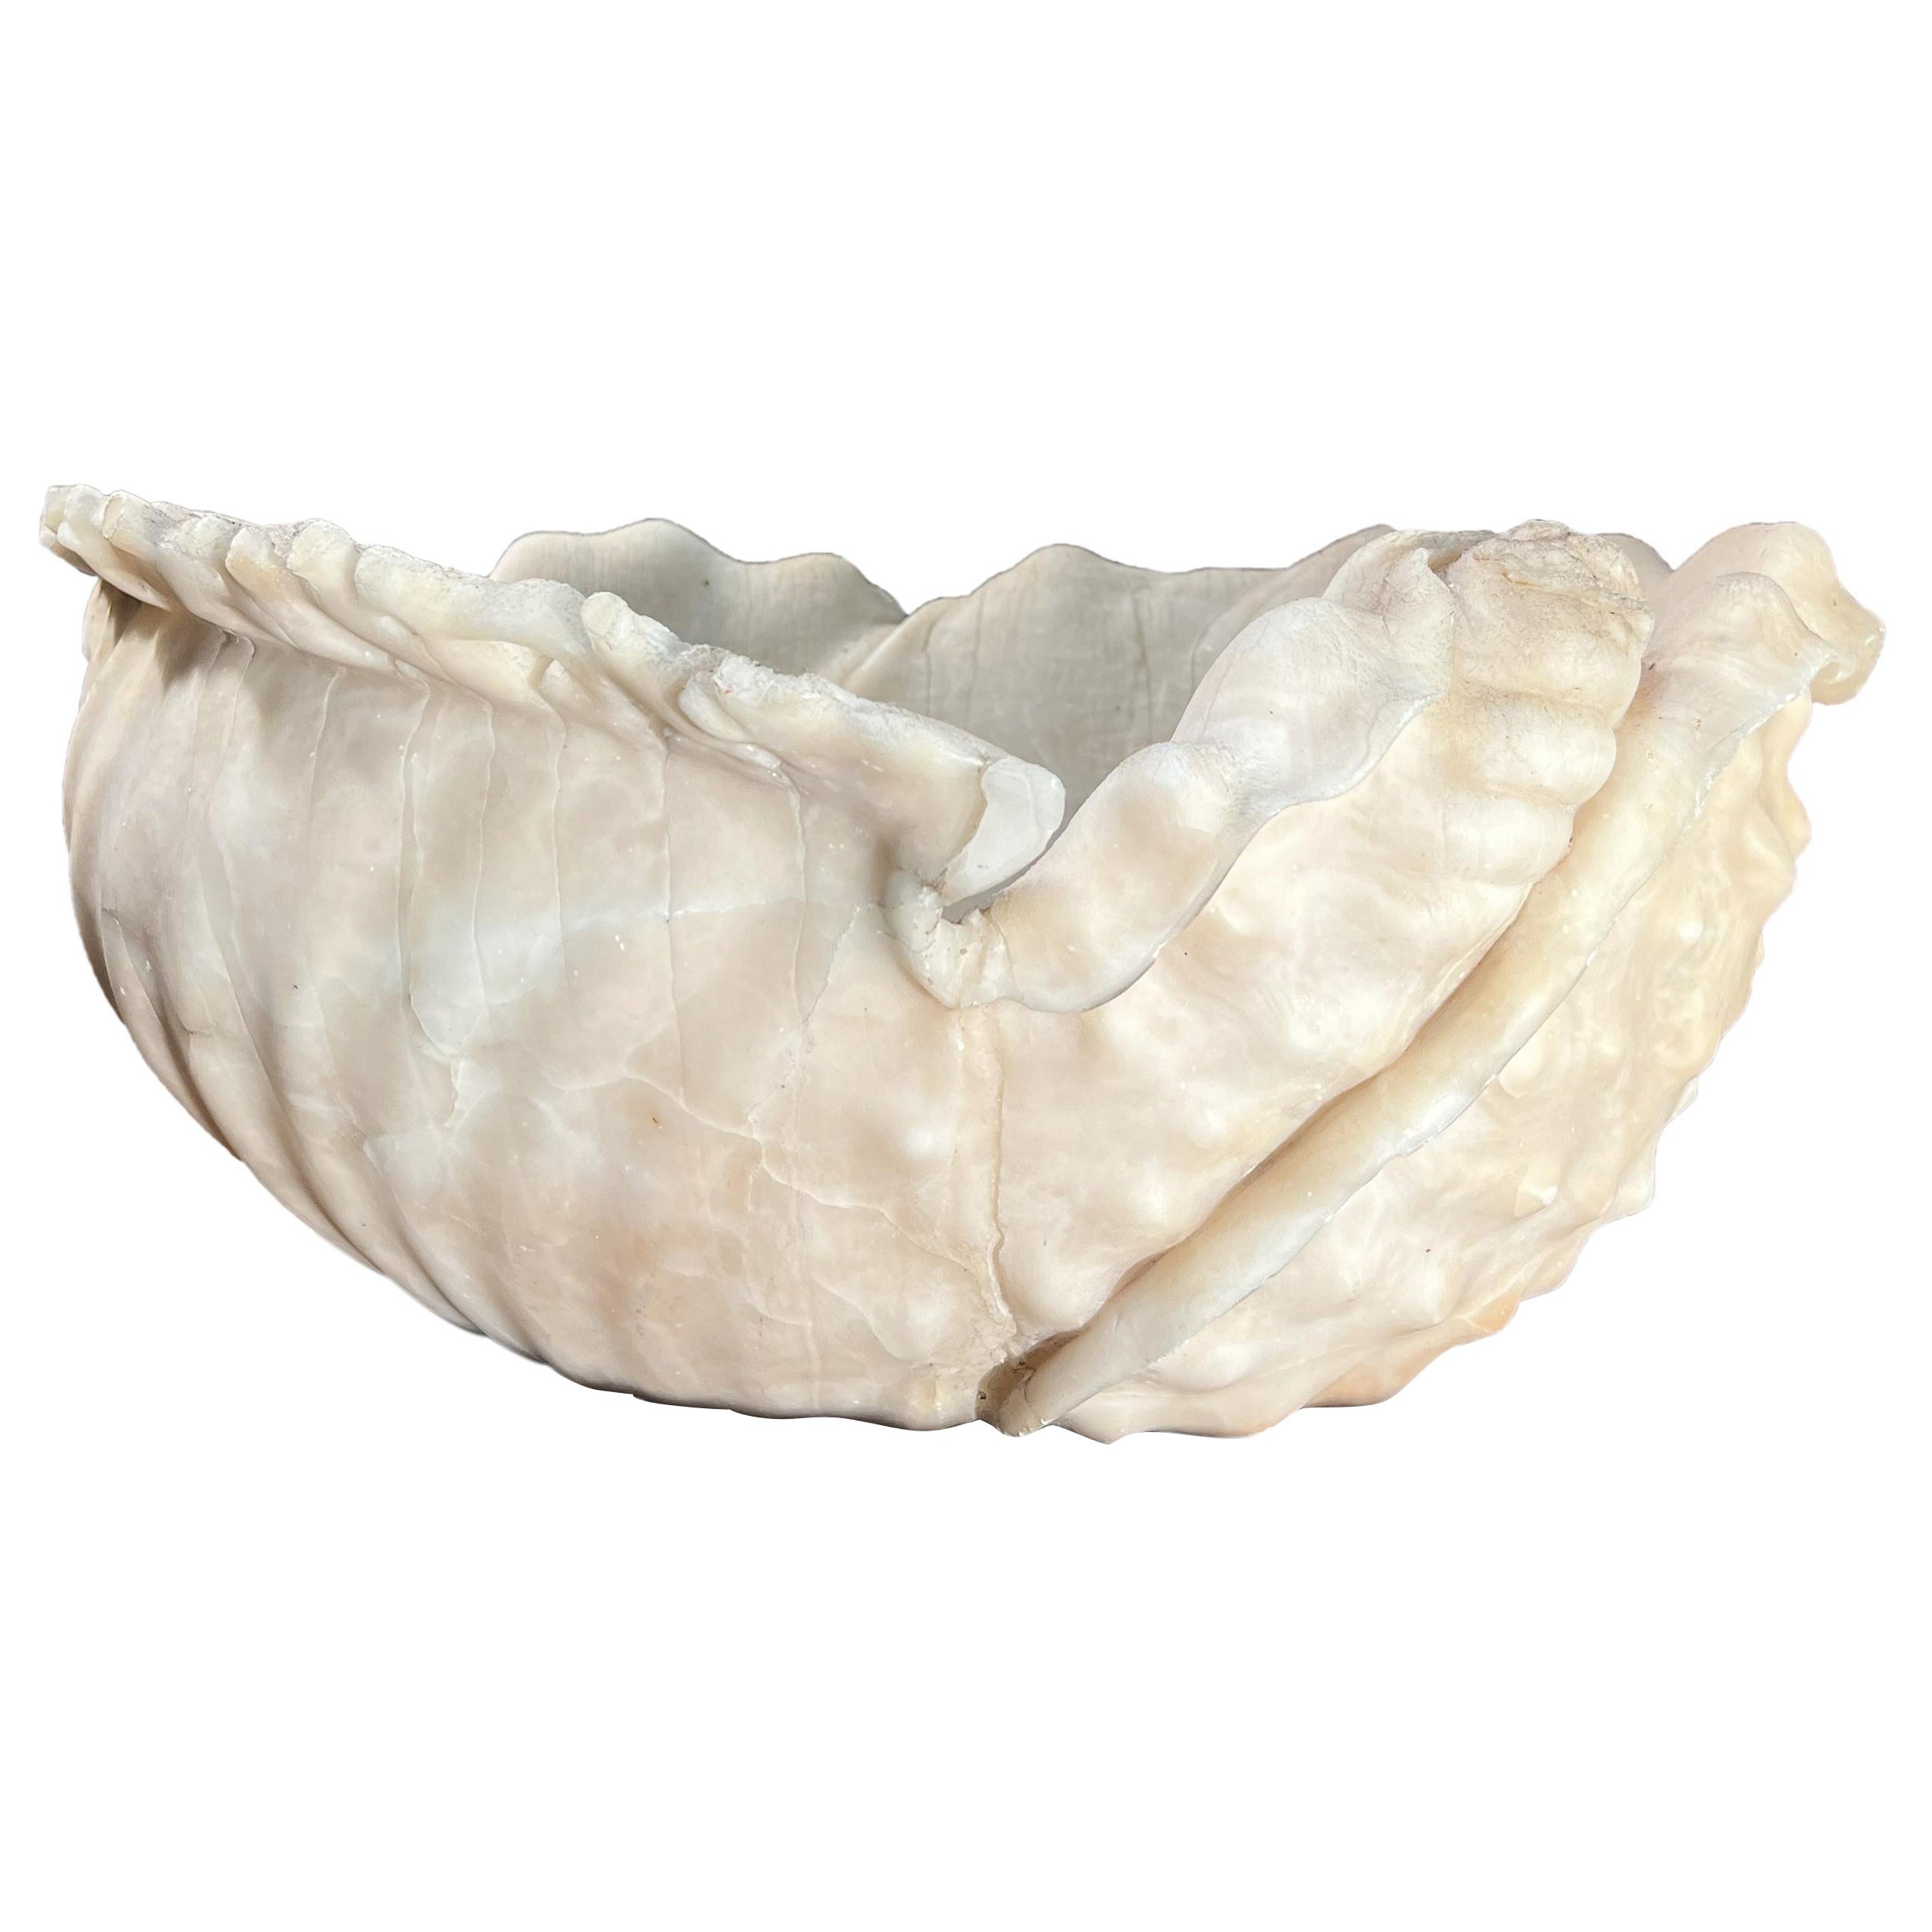 Antique italian Roman Alabaster Shell For Sale